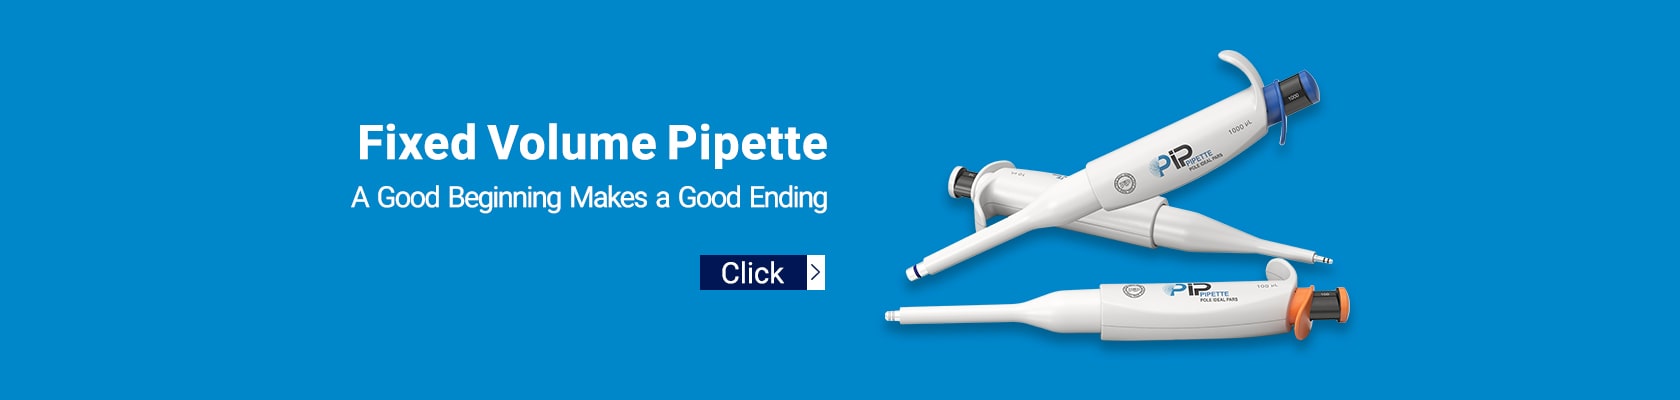 Pipette banner desktop